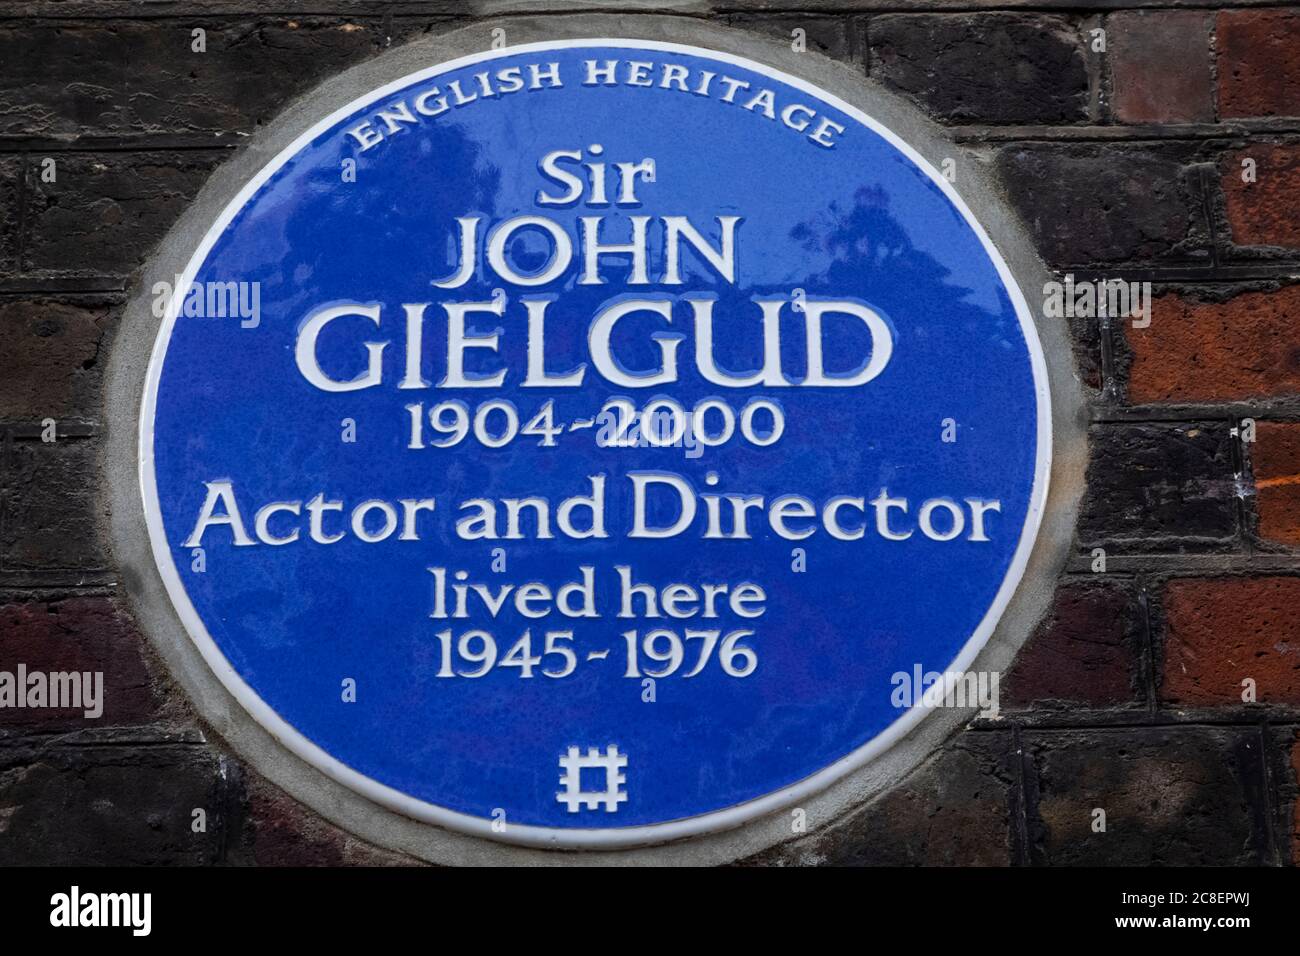 Actor Sir John Gielgud honoured with memorial stone at Westminster